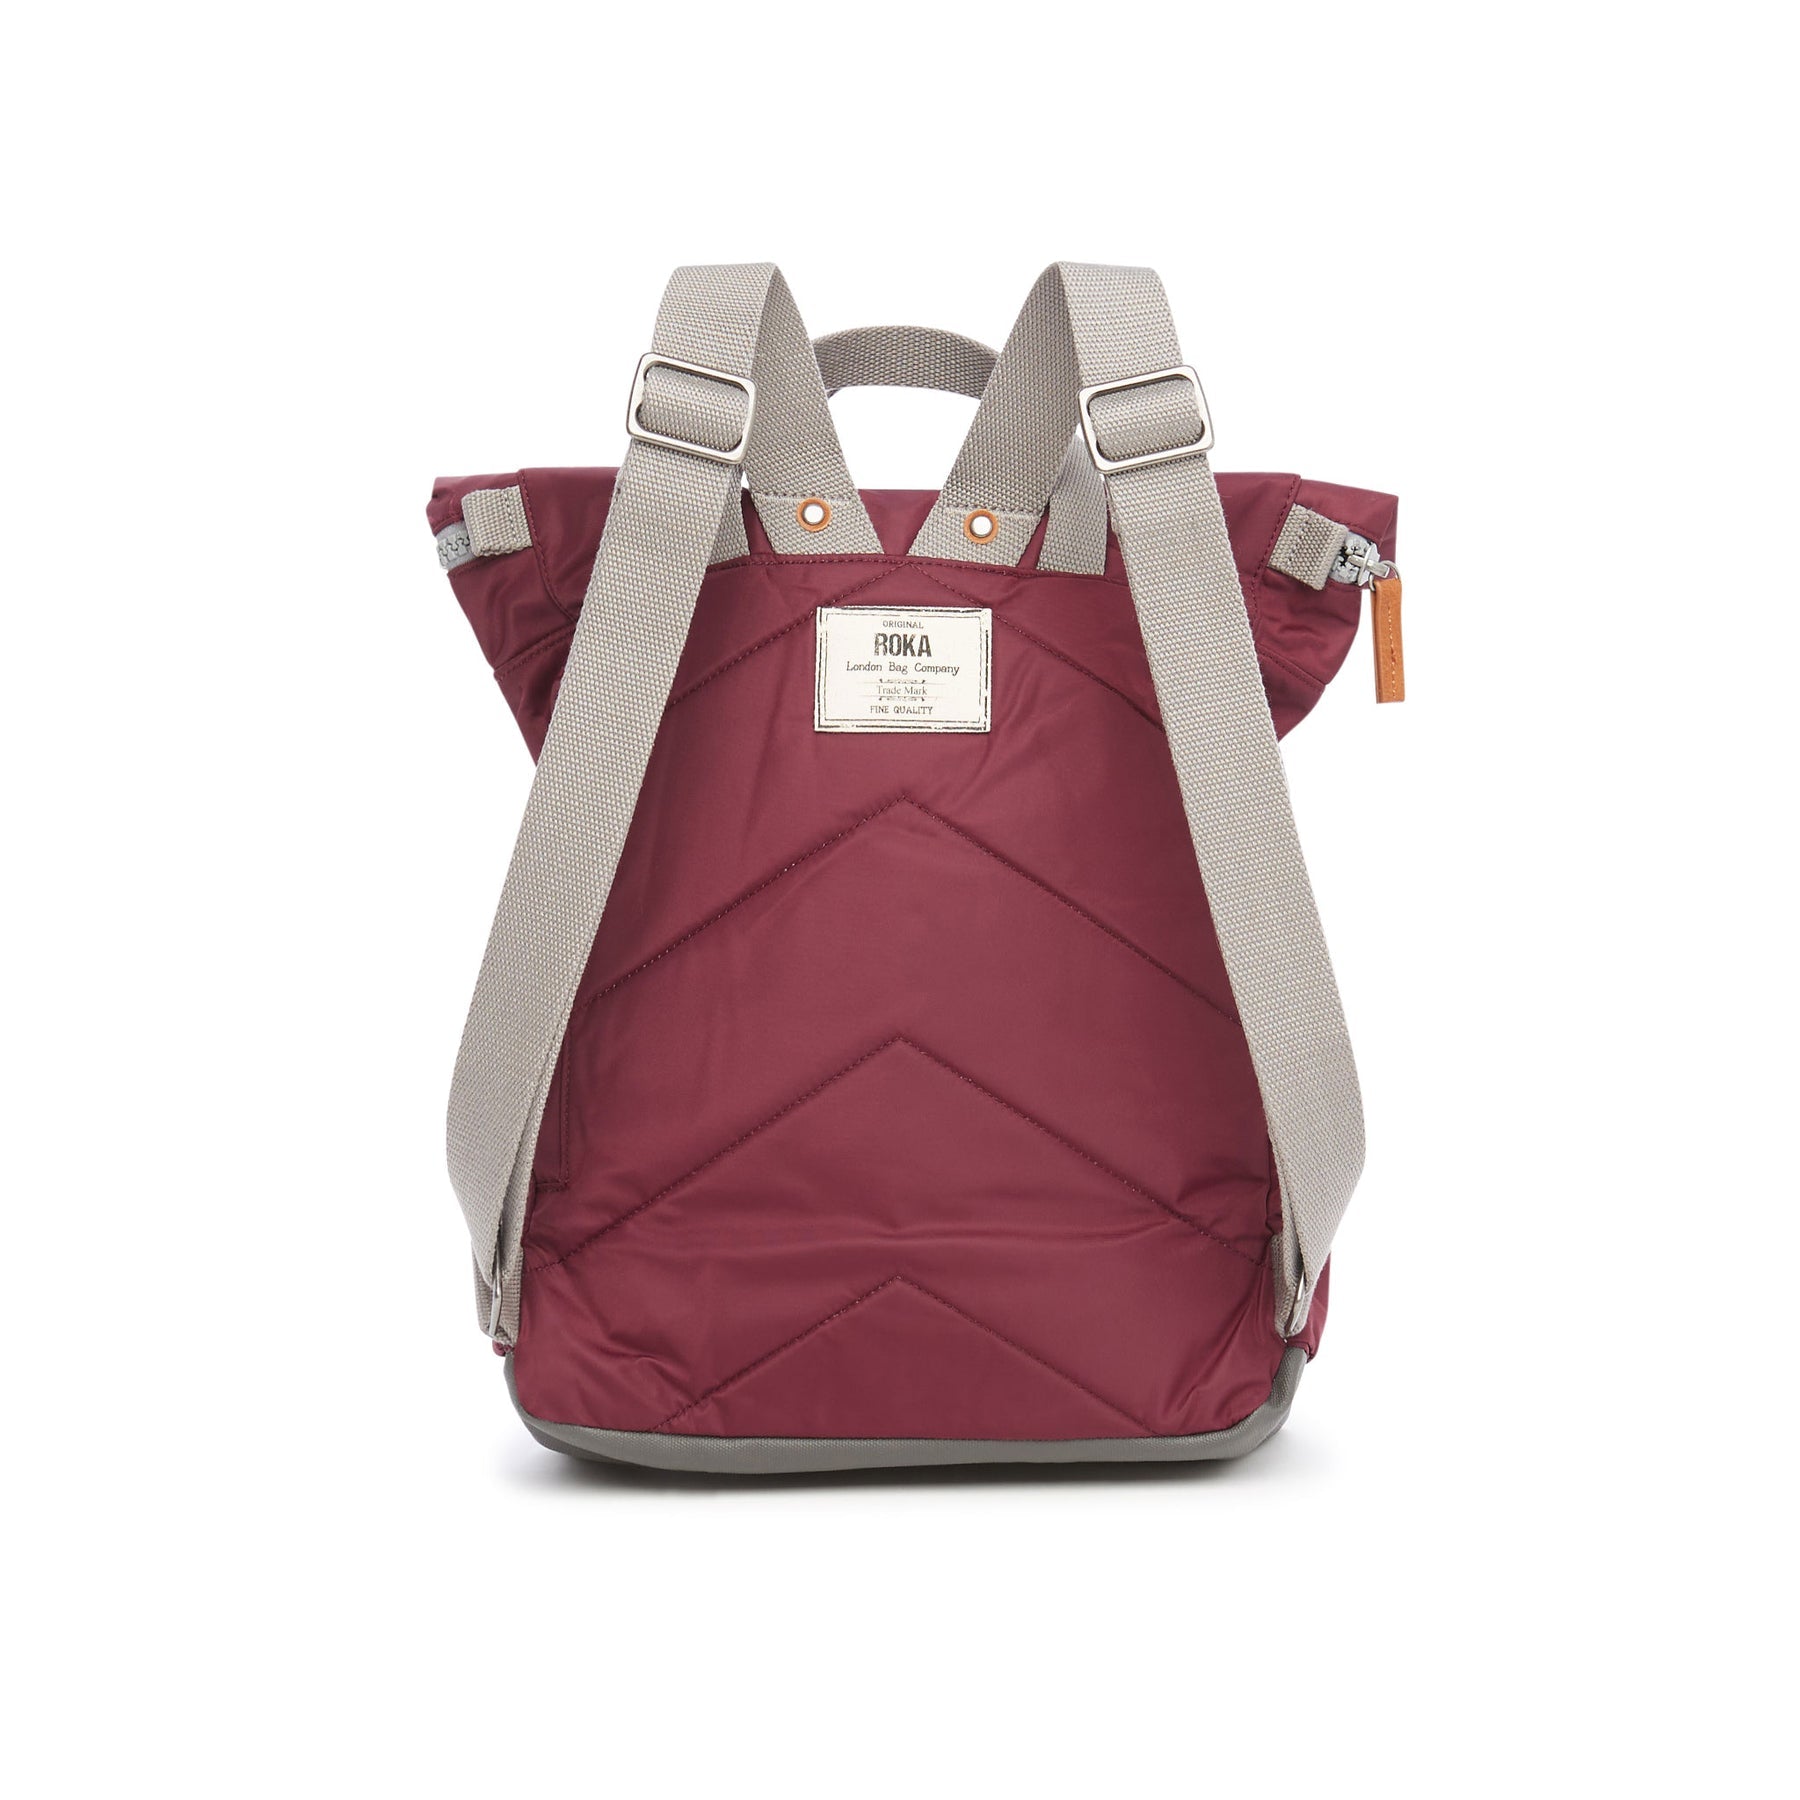 ROKA London Canfield B Small Backpack: Plum